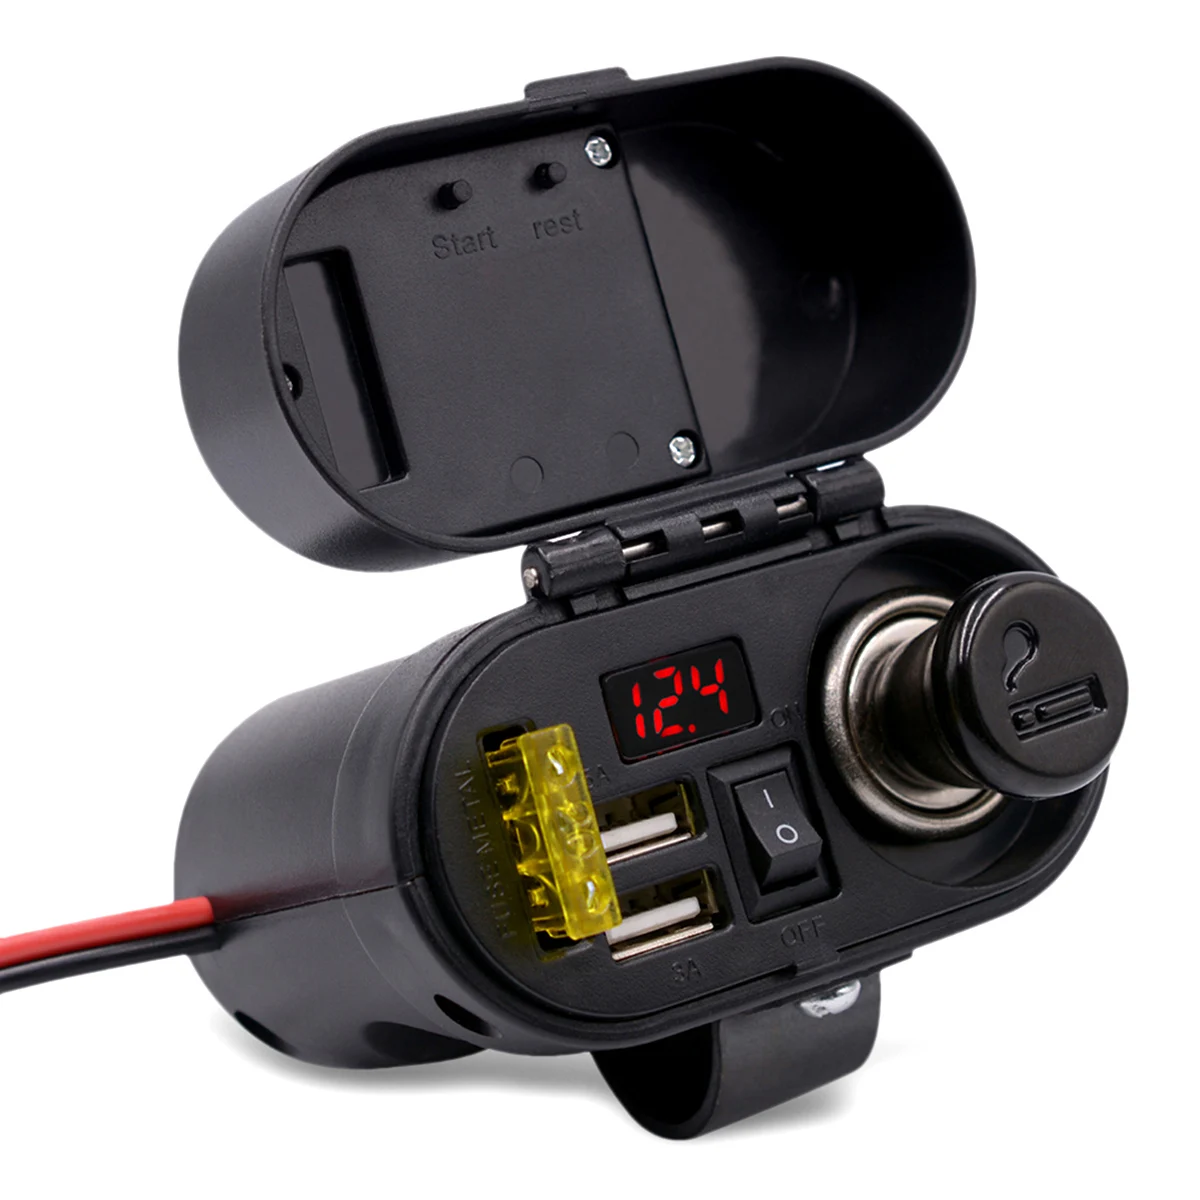 

20A Fuse 12V-24V Motorcycle Cigarette Lighter 5V 3.1A Waterproof Dual USB Port Charger With Voltmeter Time Display